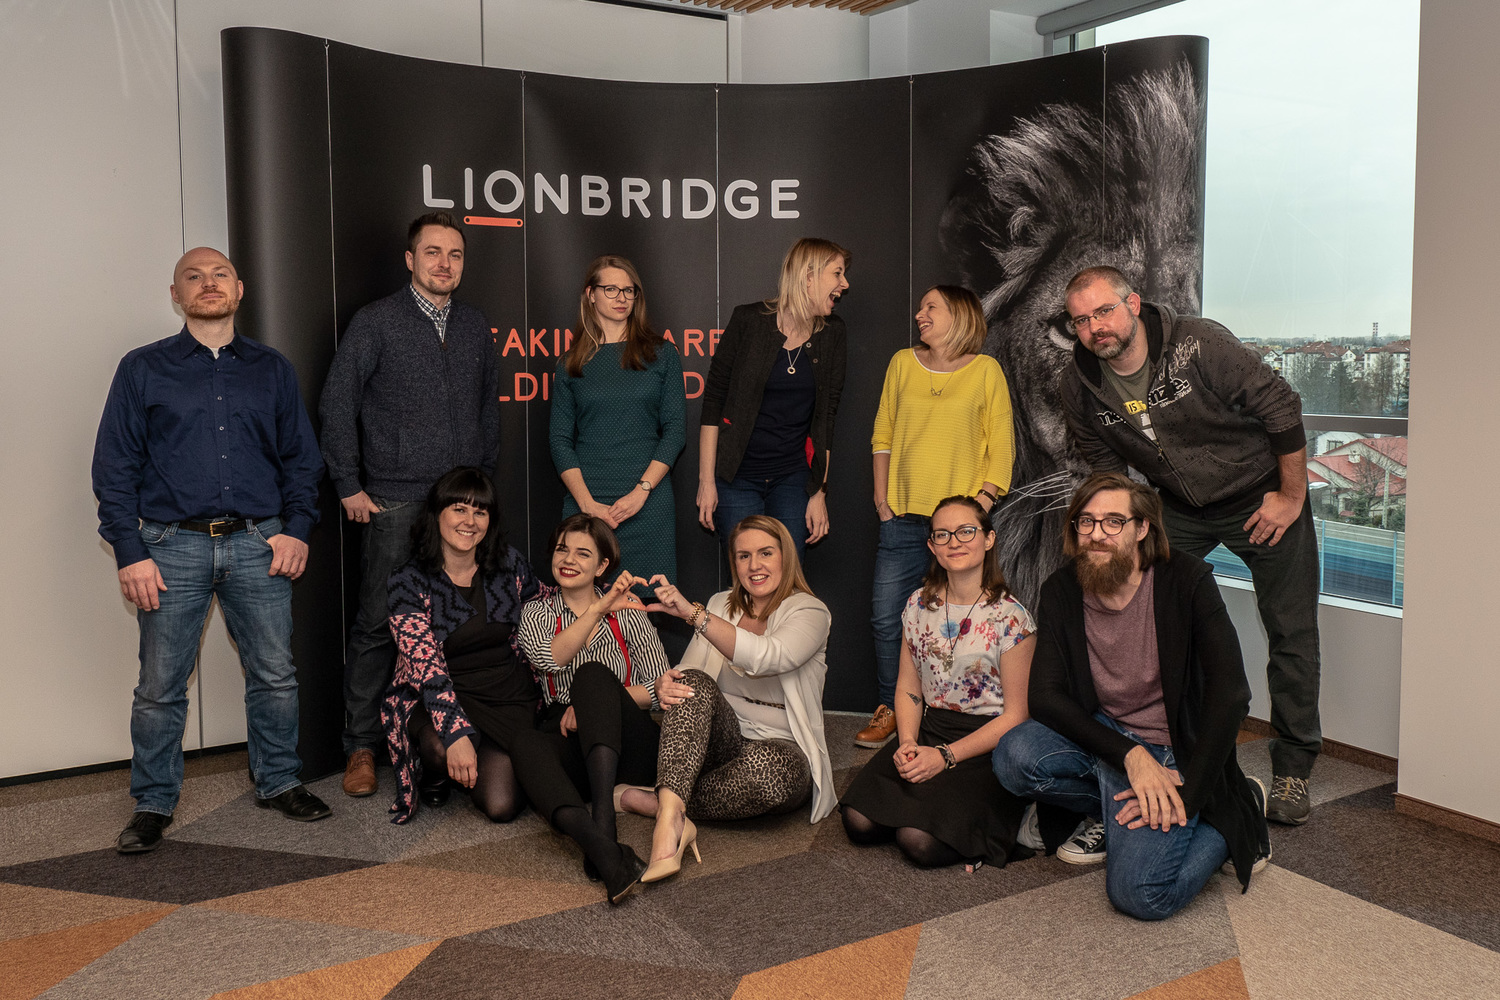 Lionbridge employees posing for group photo